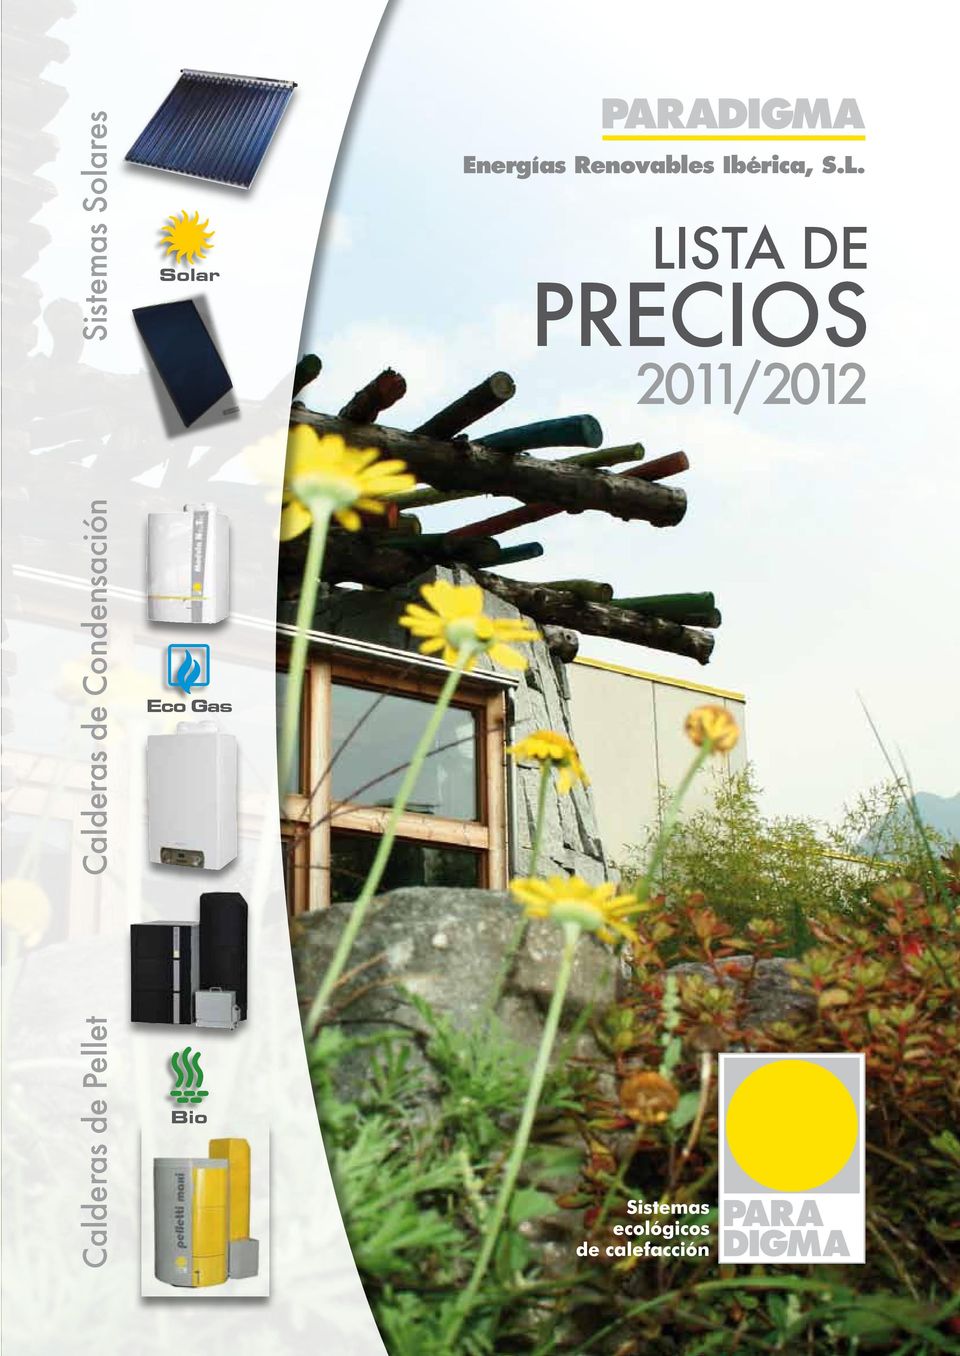 LISTA DE PRECIOS 2011/2012